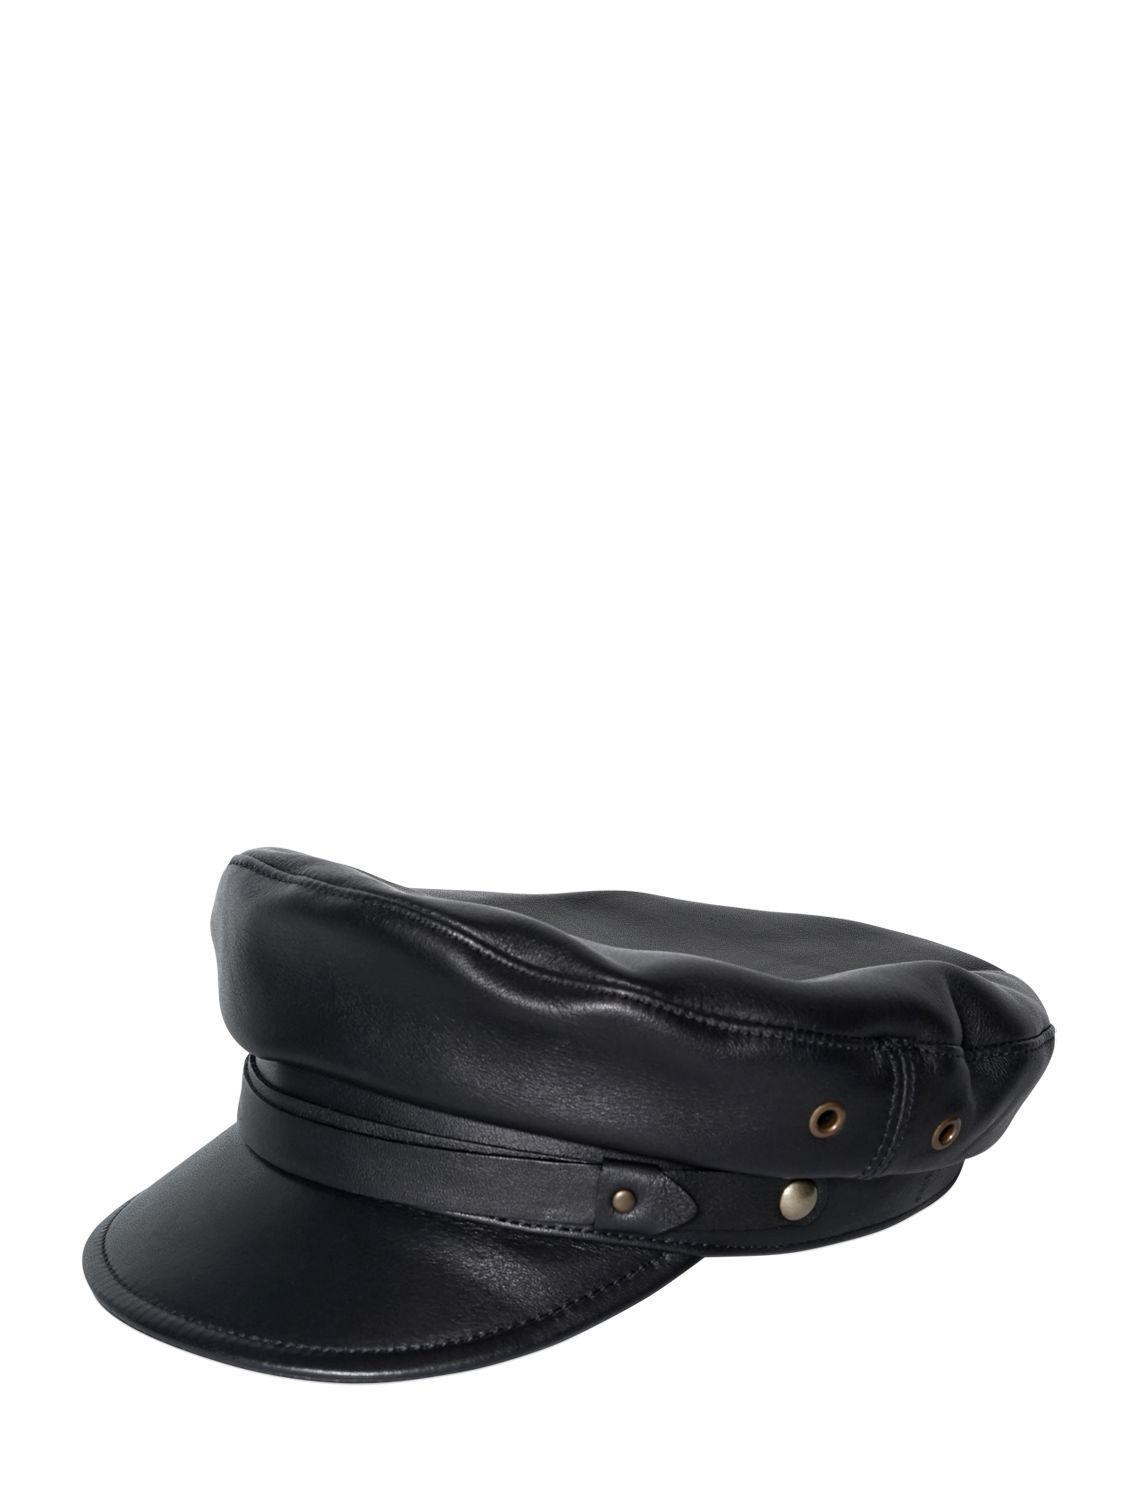 DSquared² Leather Biker Hat in Black for Men | Lyst